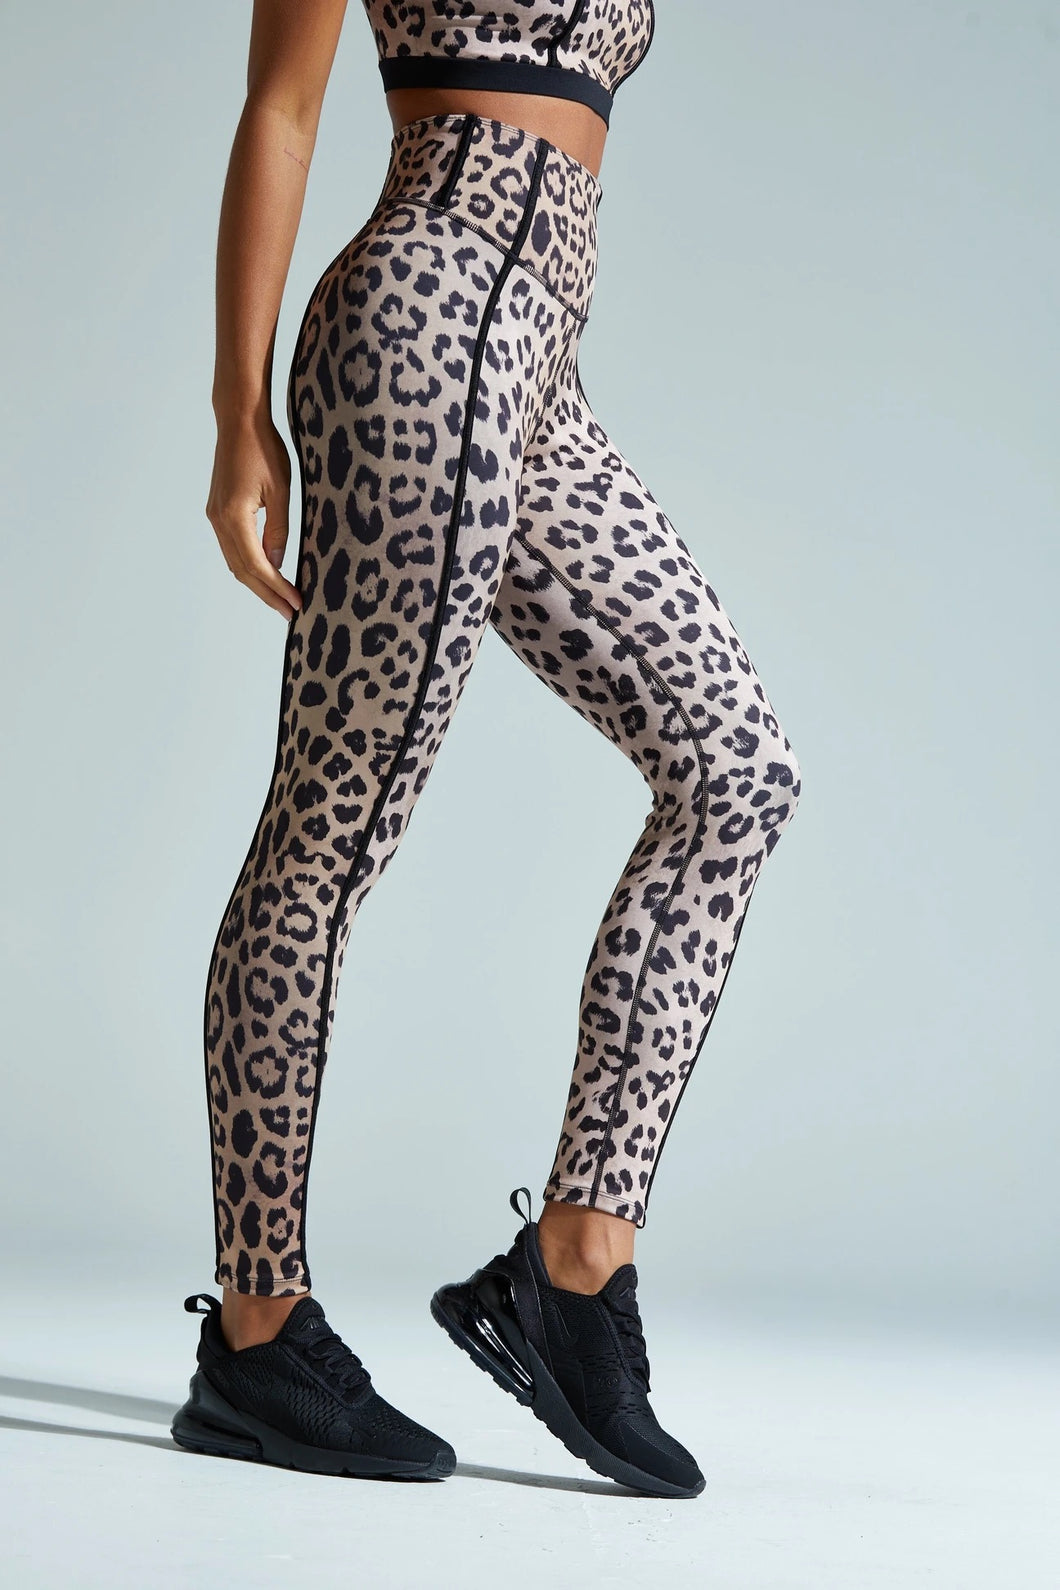 Zyia Brilliant Hi Rise Crop Legging leopard Print Side panel with pockets 